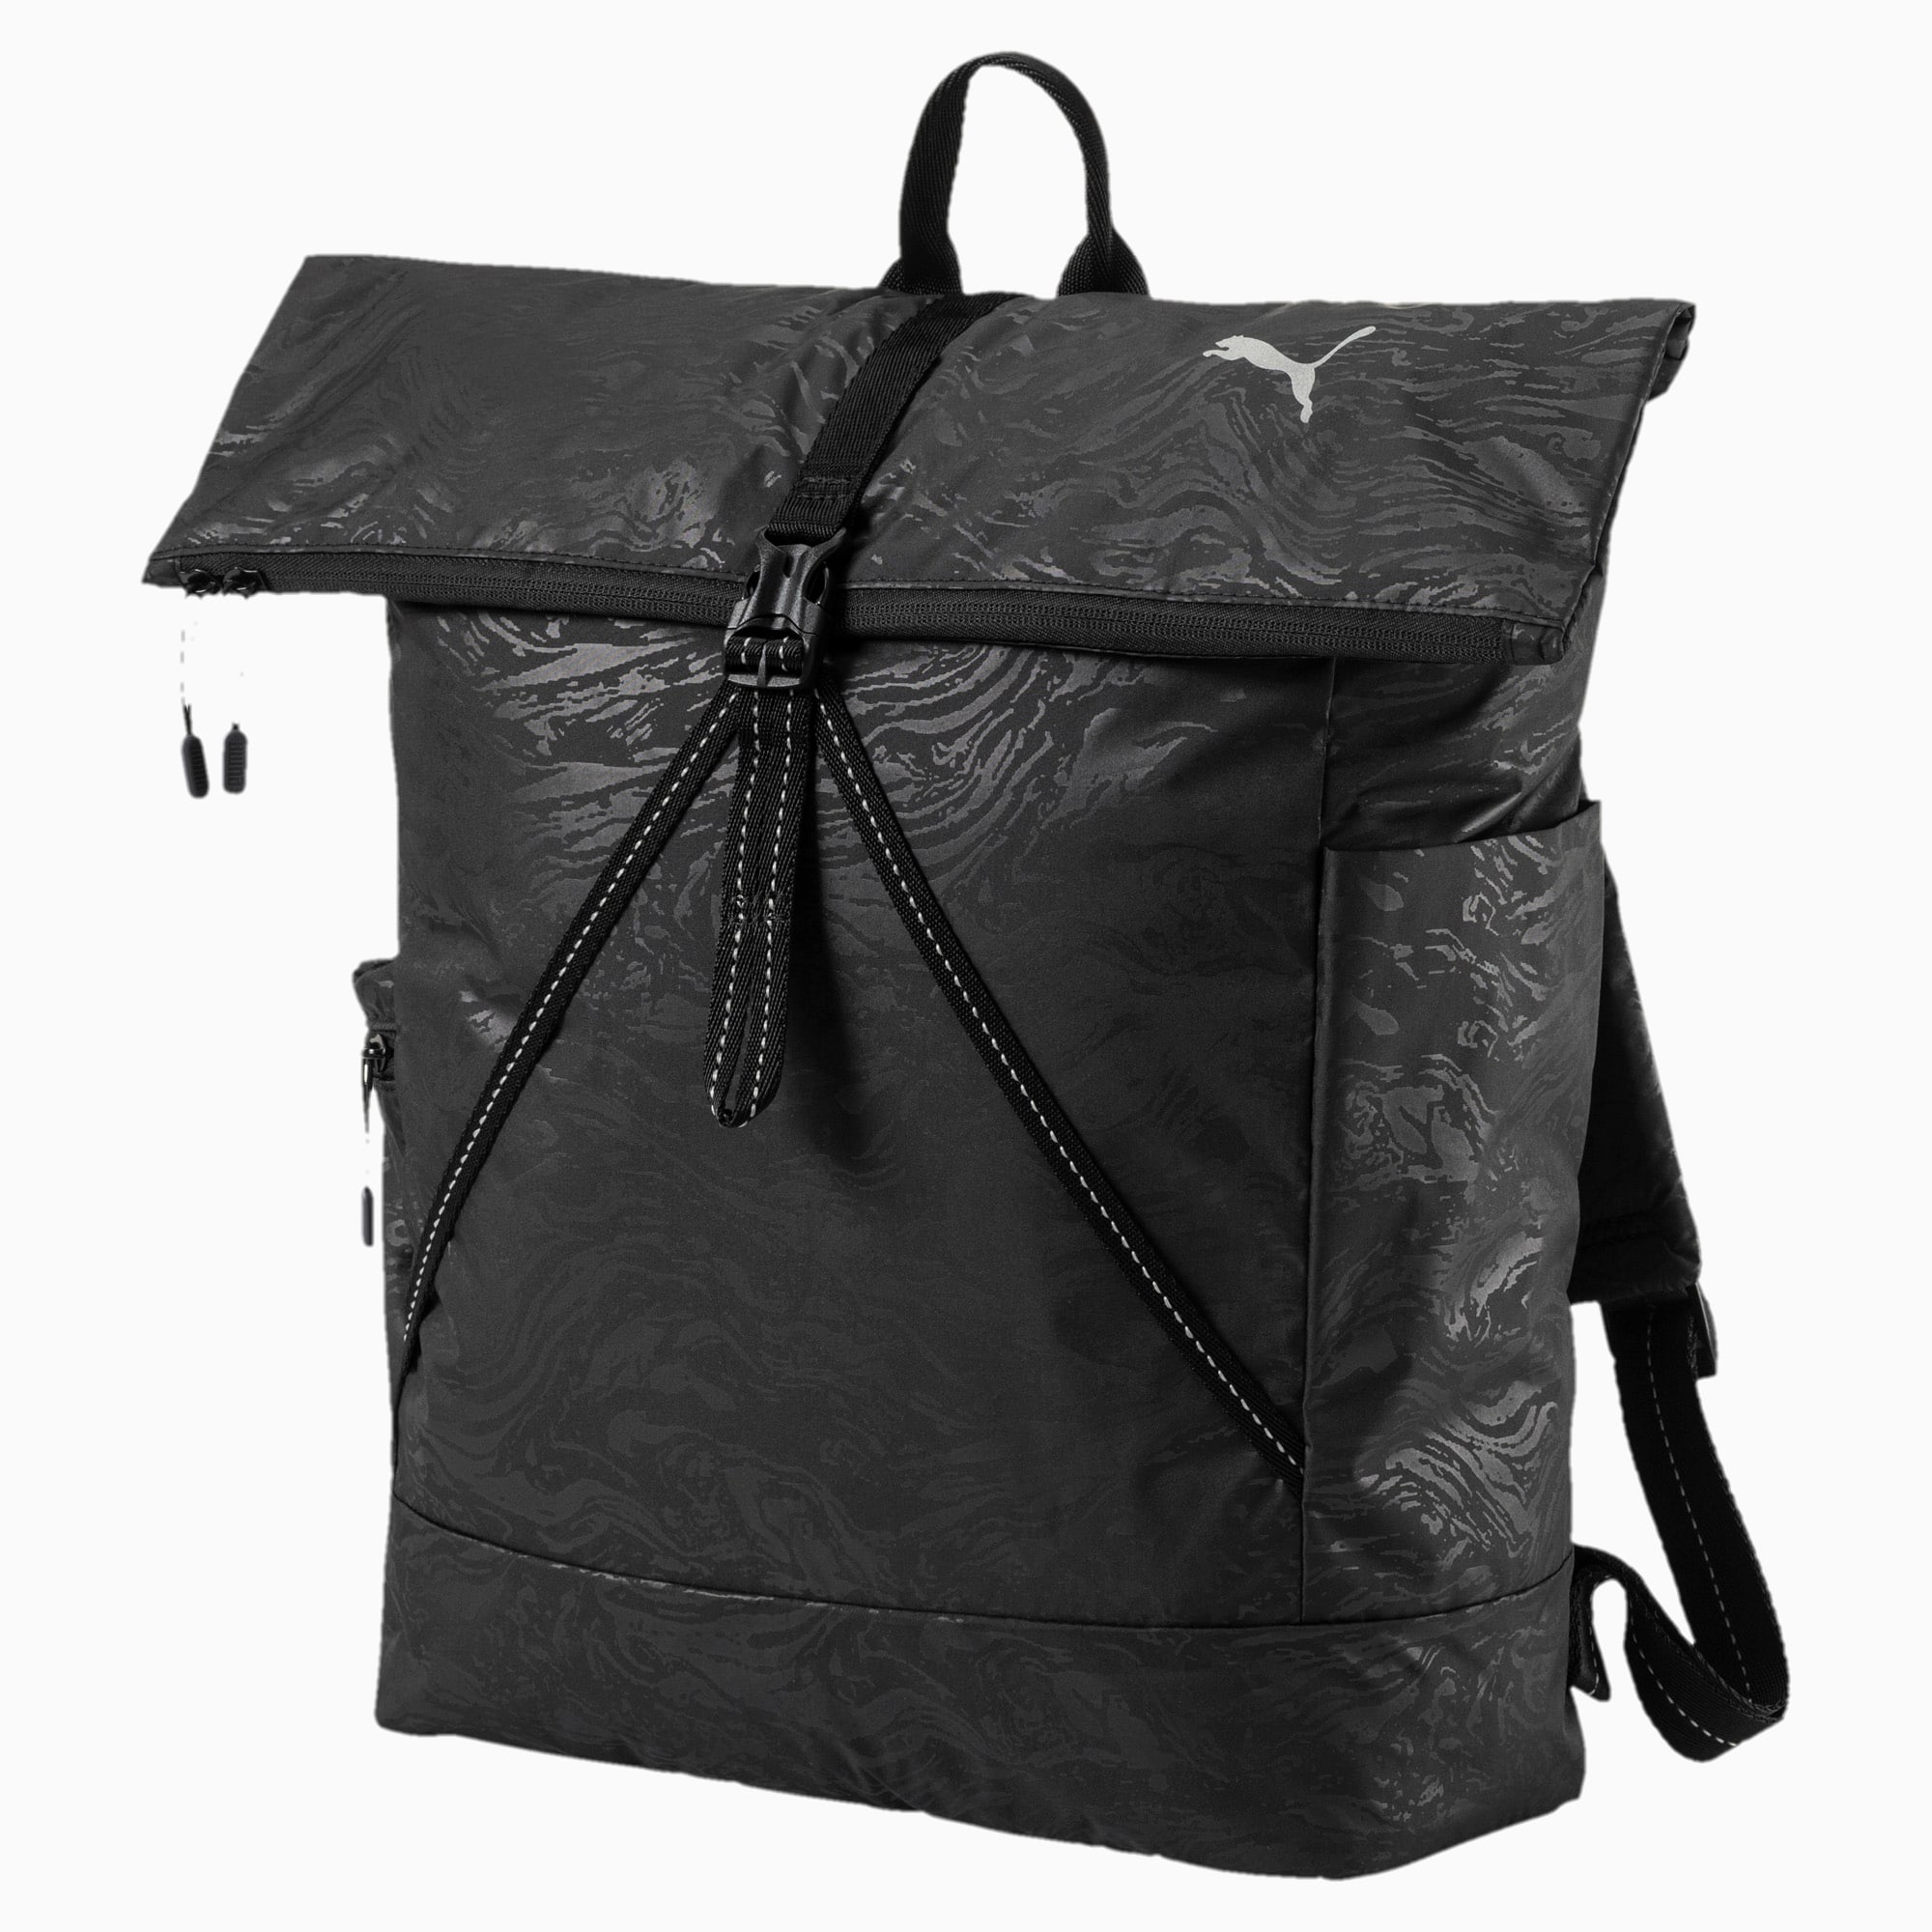 puma black leather backpack